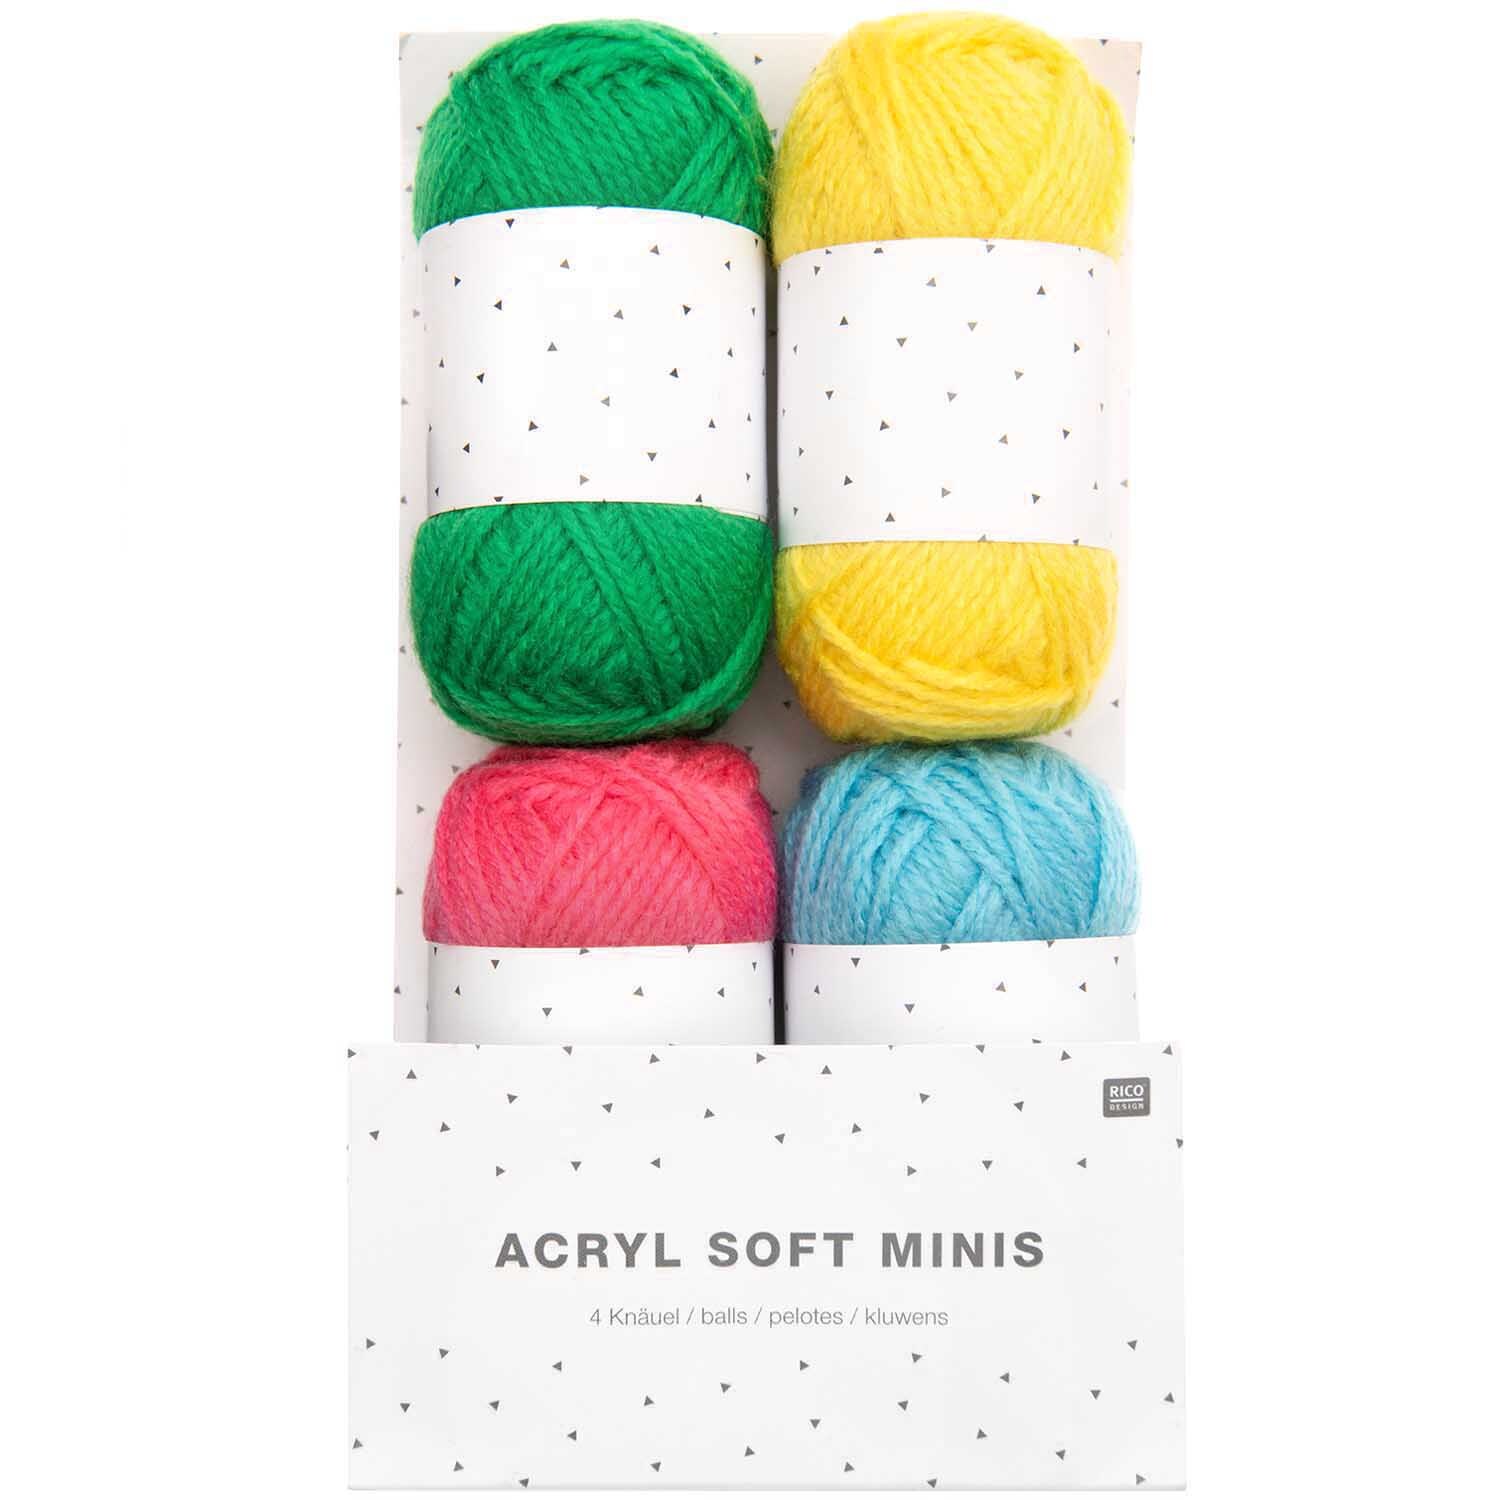 Acryl Soft Minis bunt